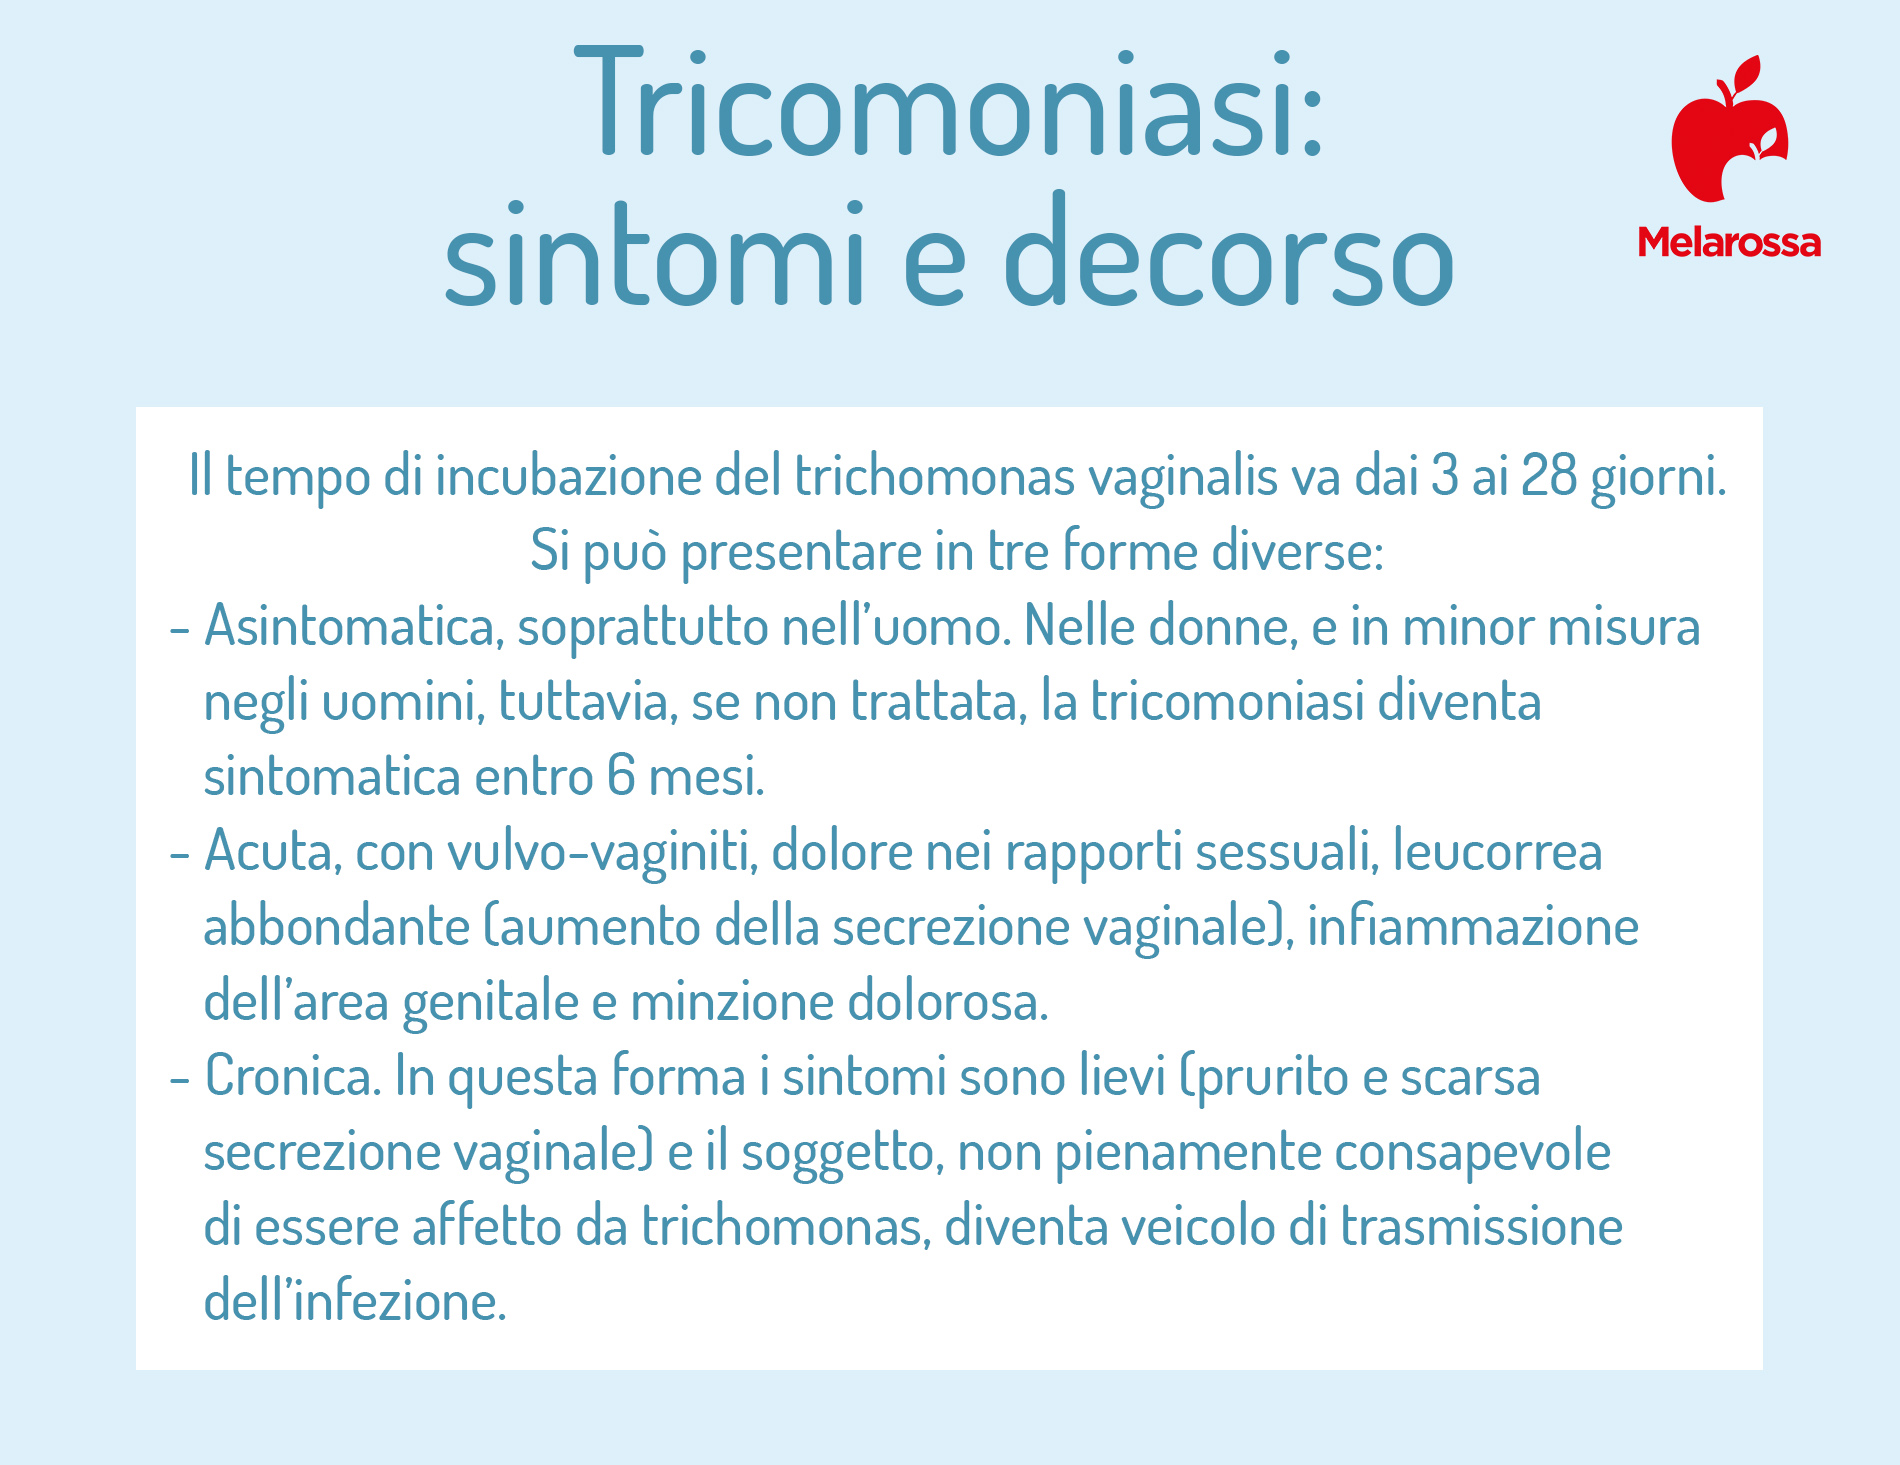 tricomoniasi: sintomi e decorso